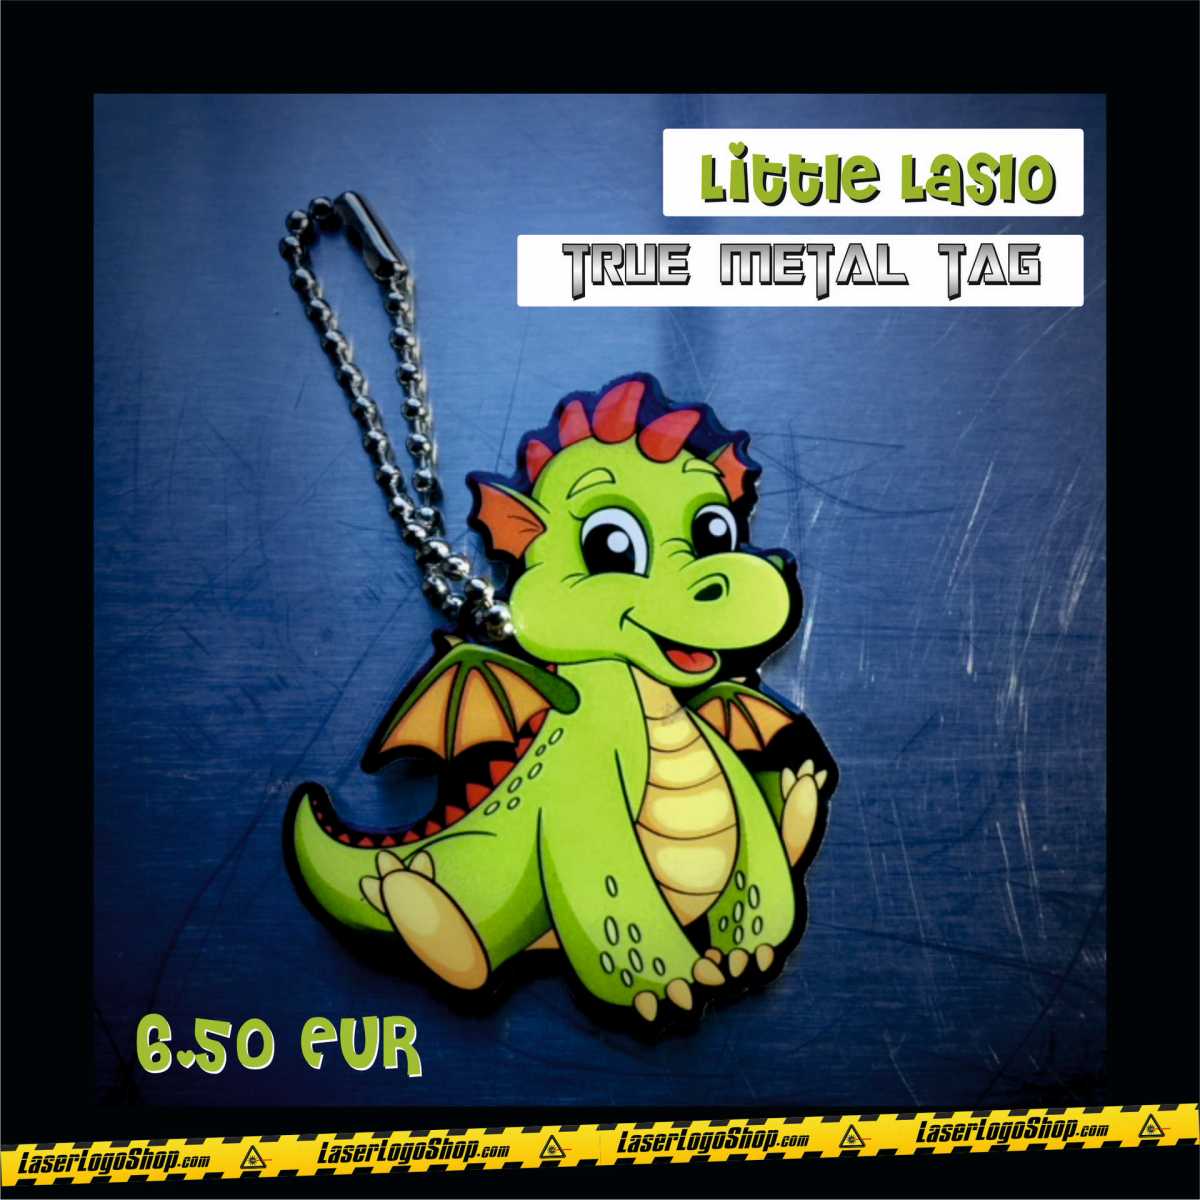 True Metal Tag "Little Laslo the Dragon"